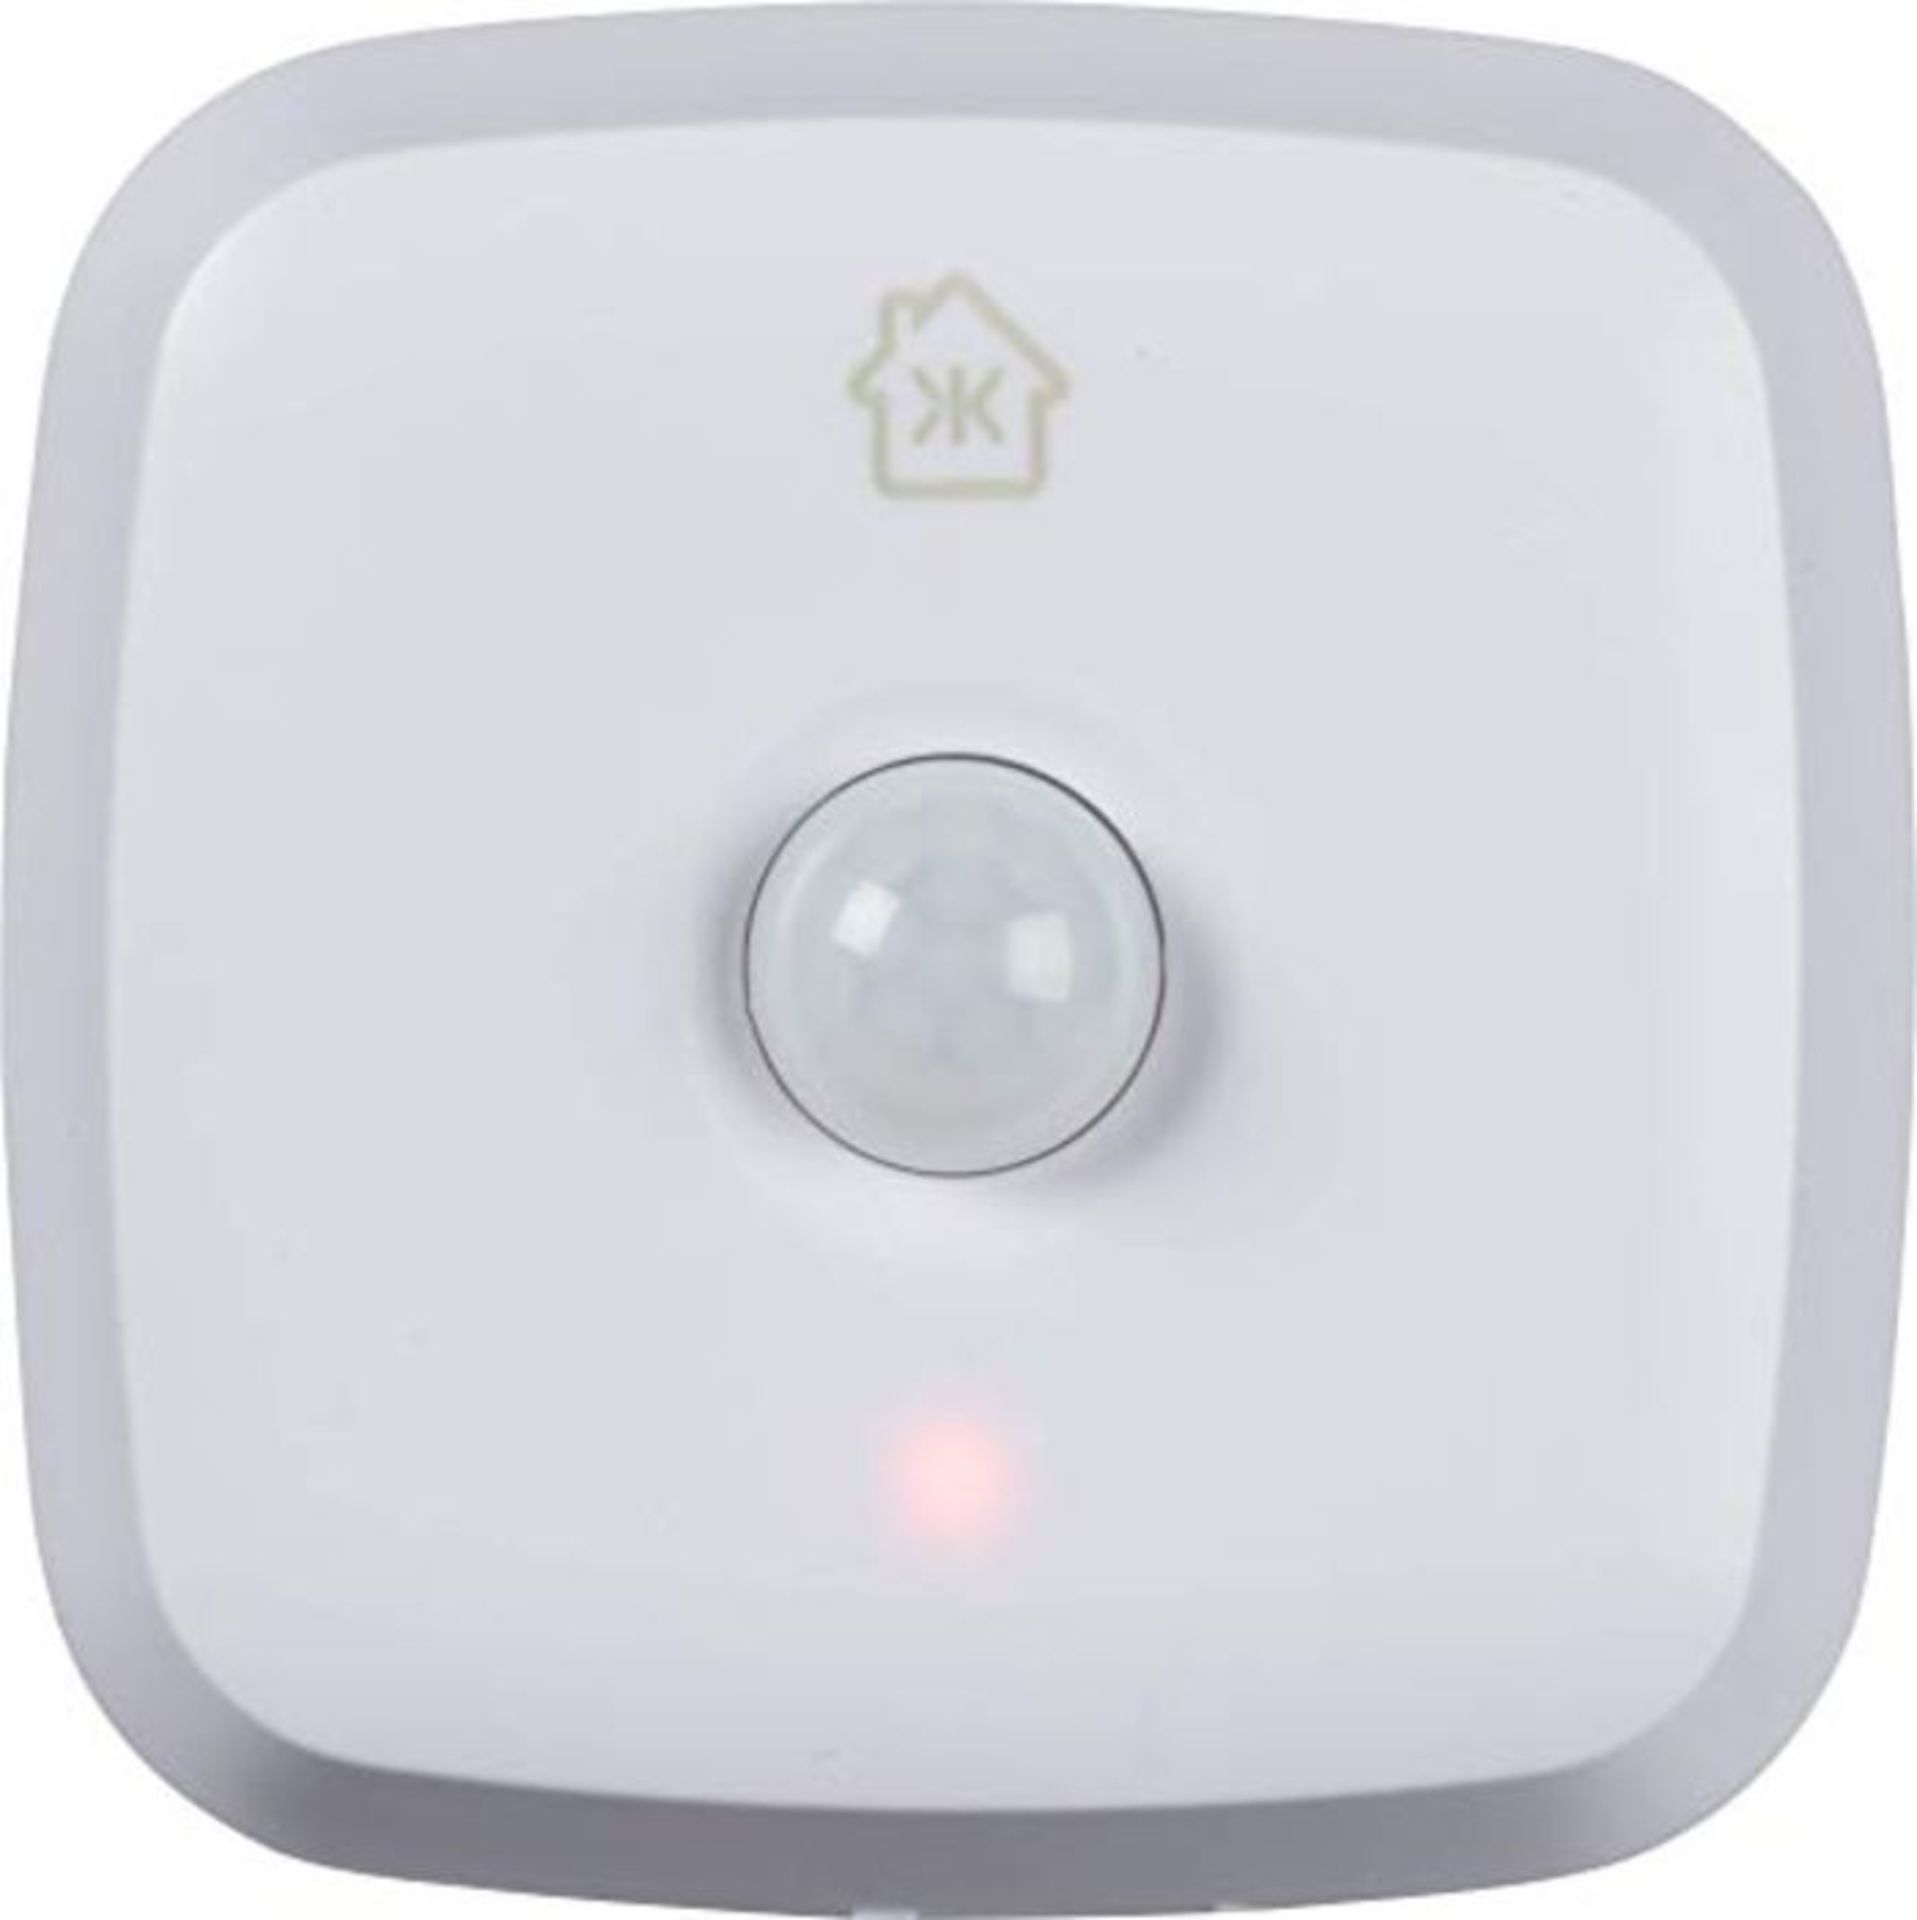 Knightsbridge OSMKW Smart Motion Sensor - WiFi No Hub Required, White